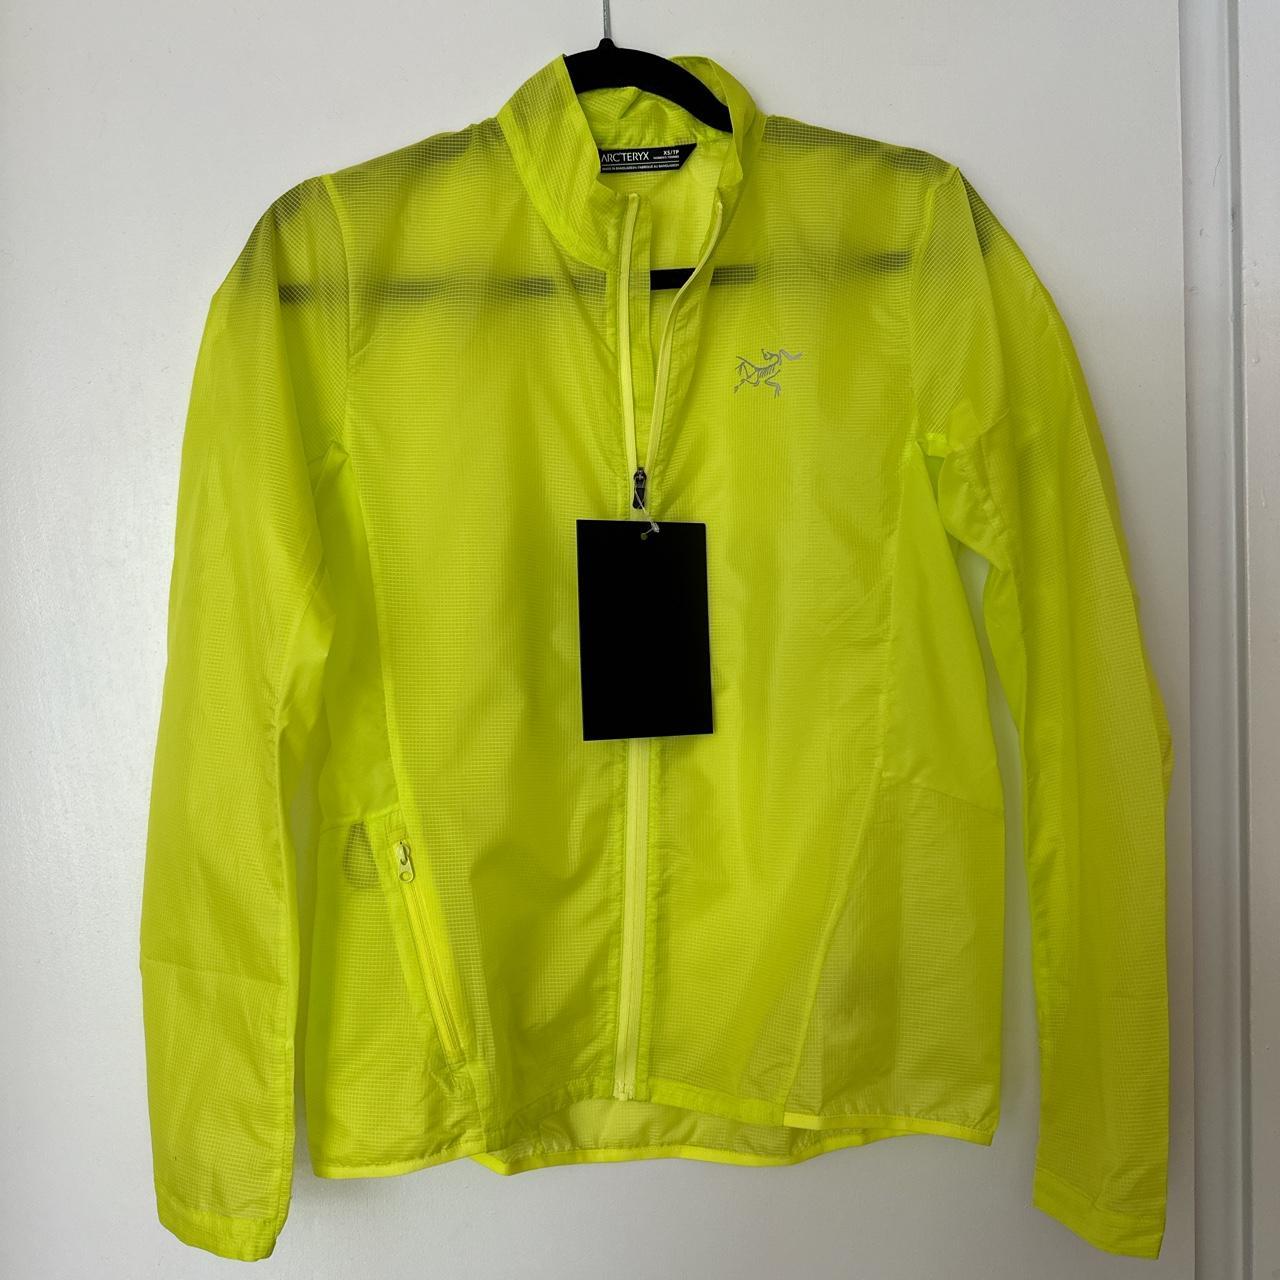 ARC’TERYX Norvan windshell jacket , Size XS, Brand new...